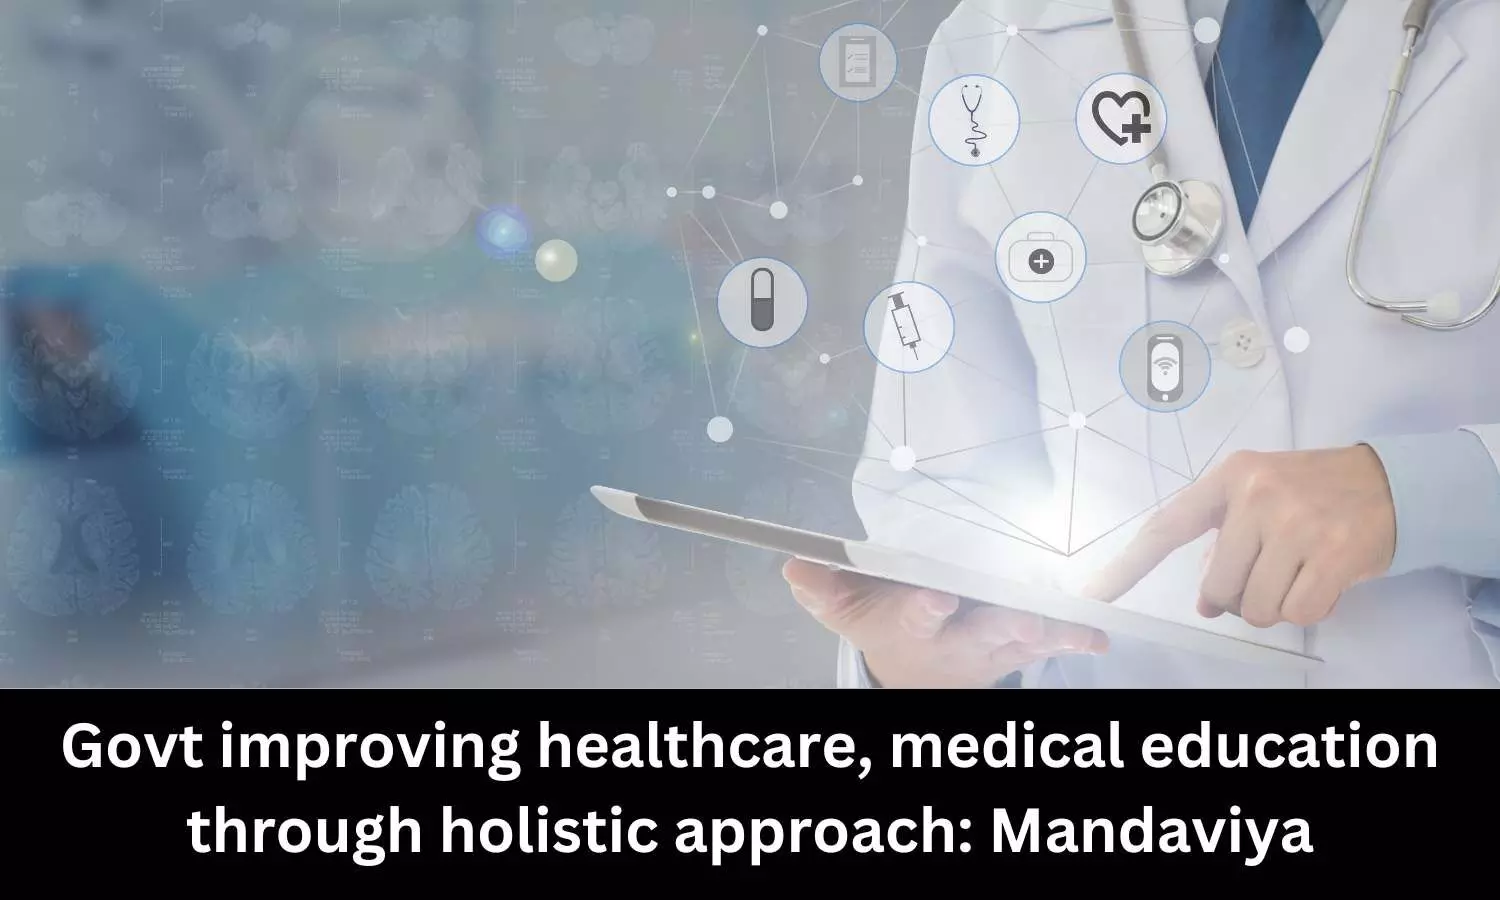 Govt improving healthcare, medical education through holistic approach, says Dr Mansukh Mandaviya